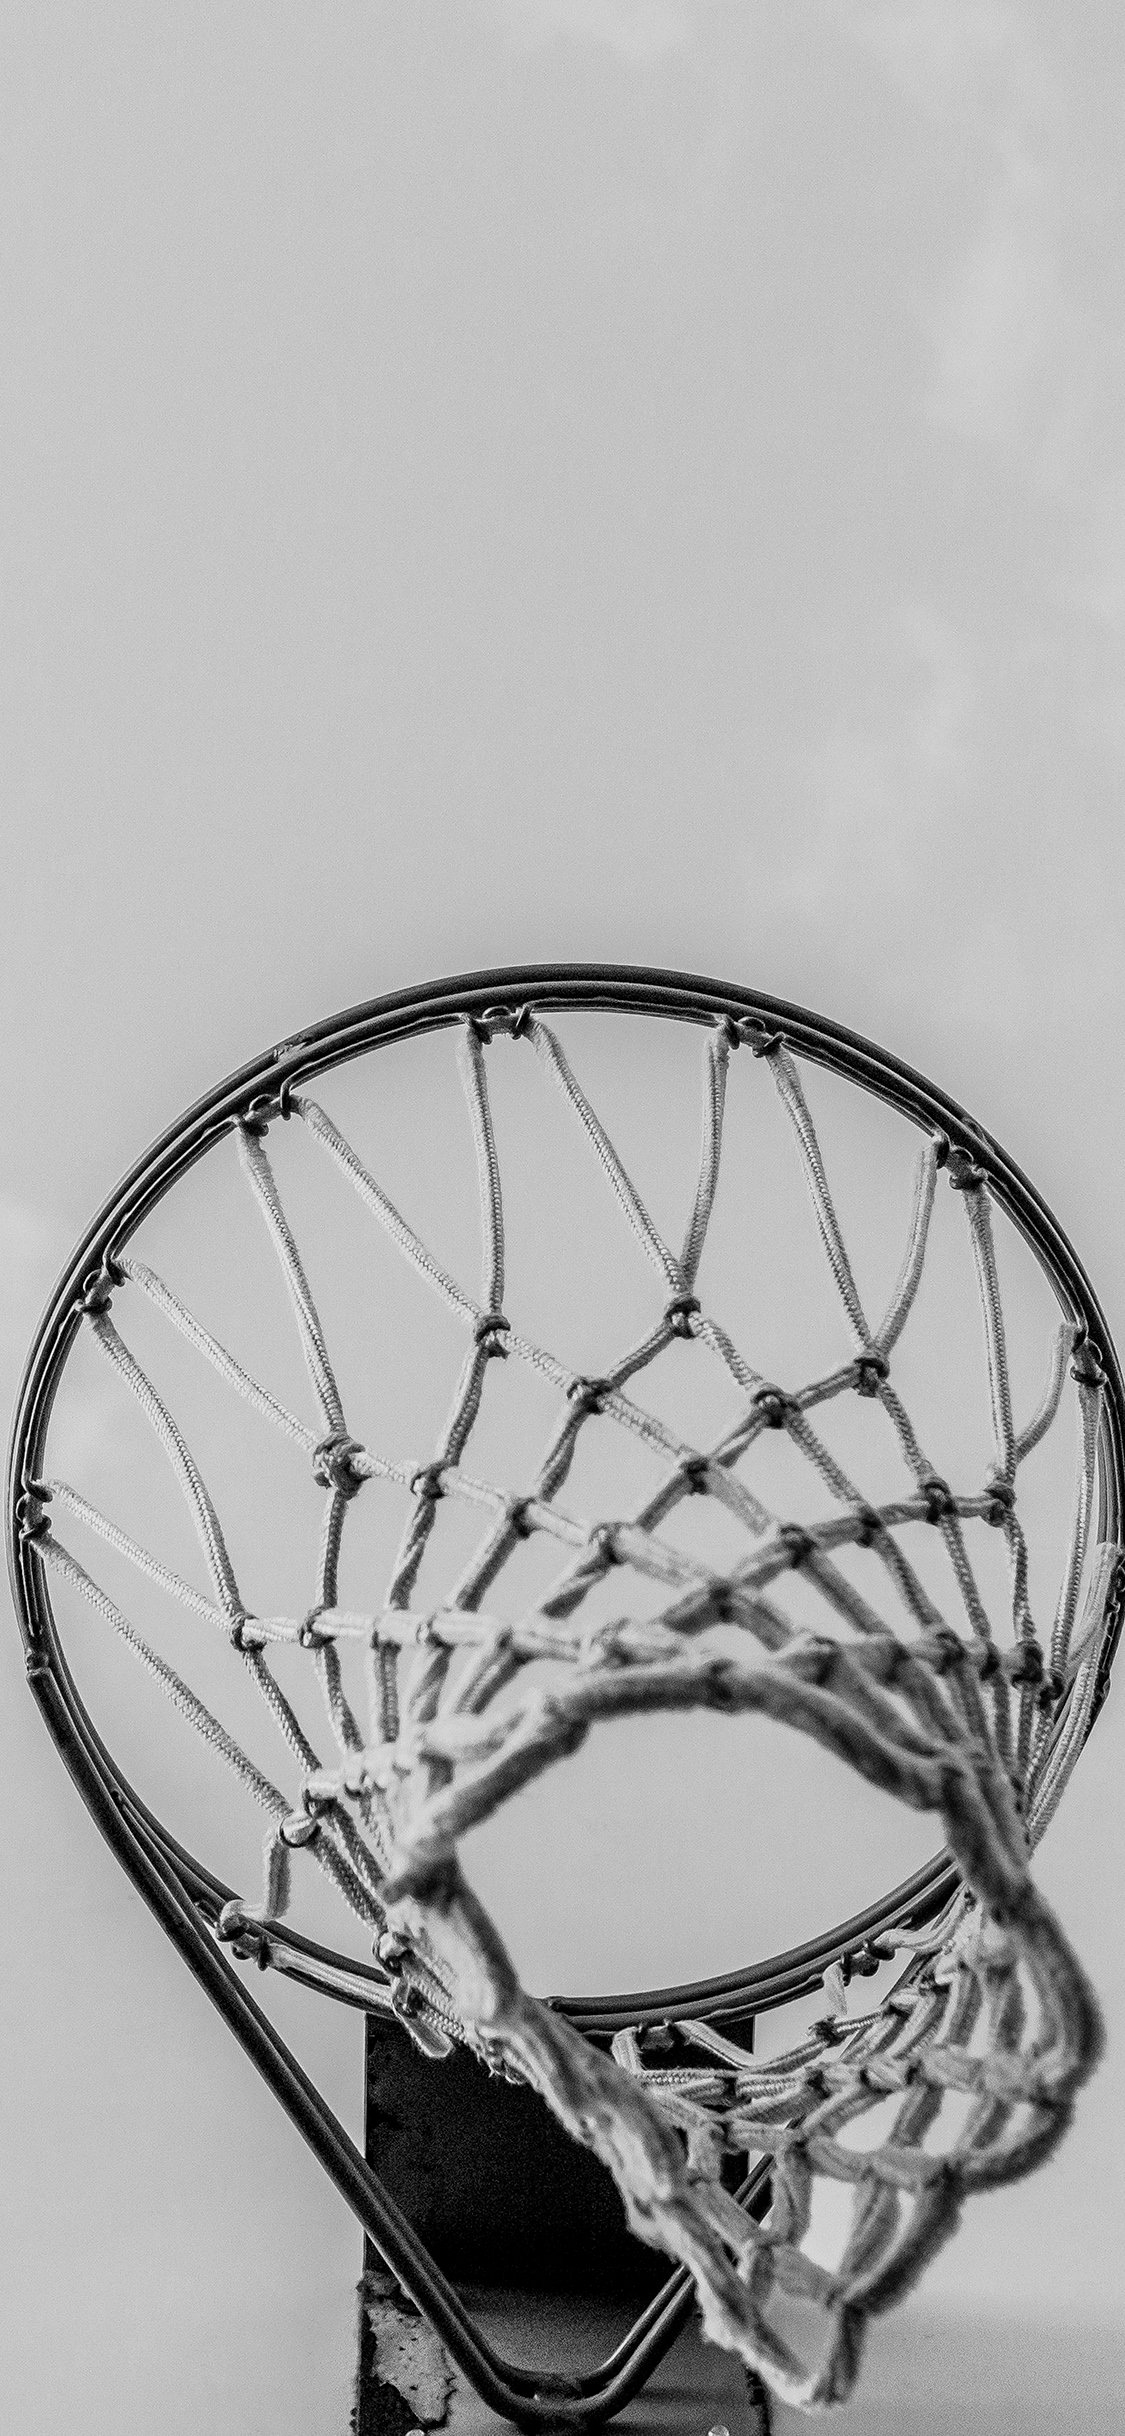 iPhone X wallpaper. basketball rim red sports dark